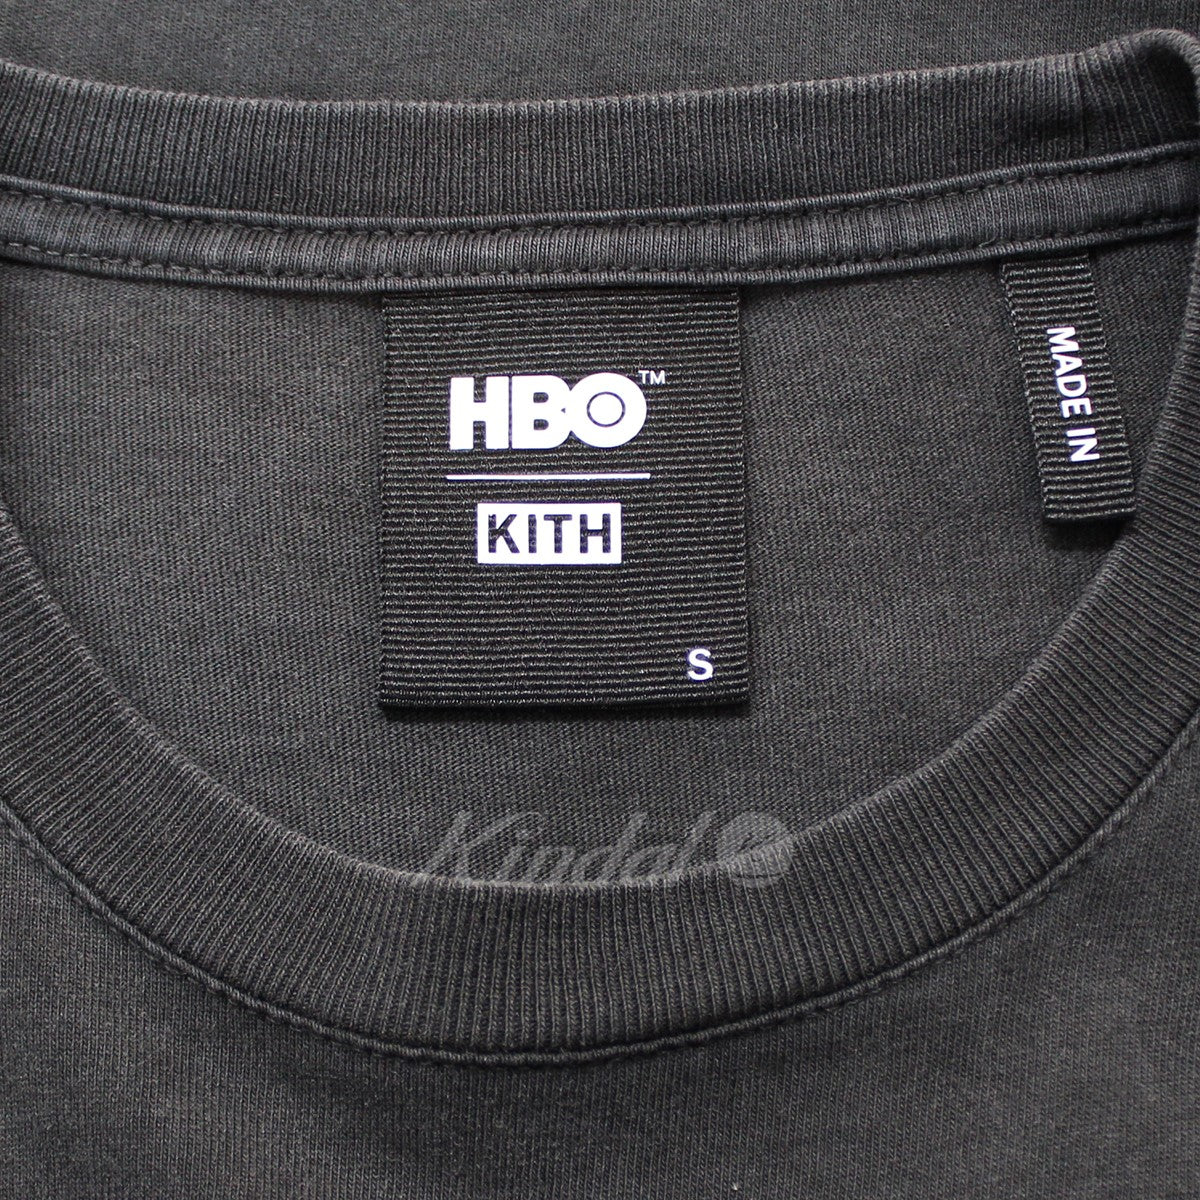 KITH(キス) 21SS HBO Rainbow Logo Vintage Tee ロゴ Tシャツ